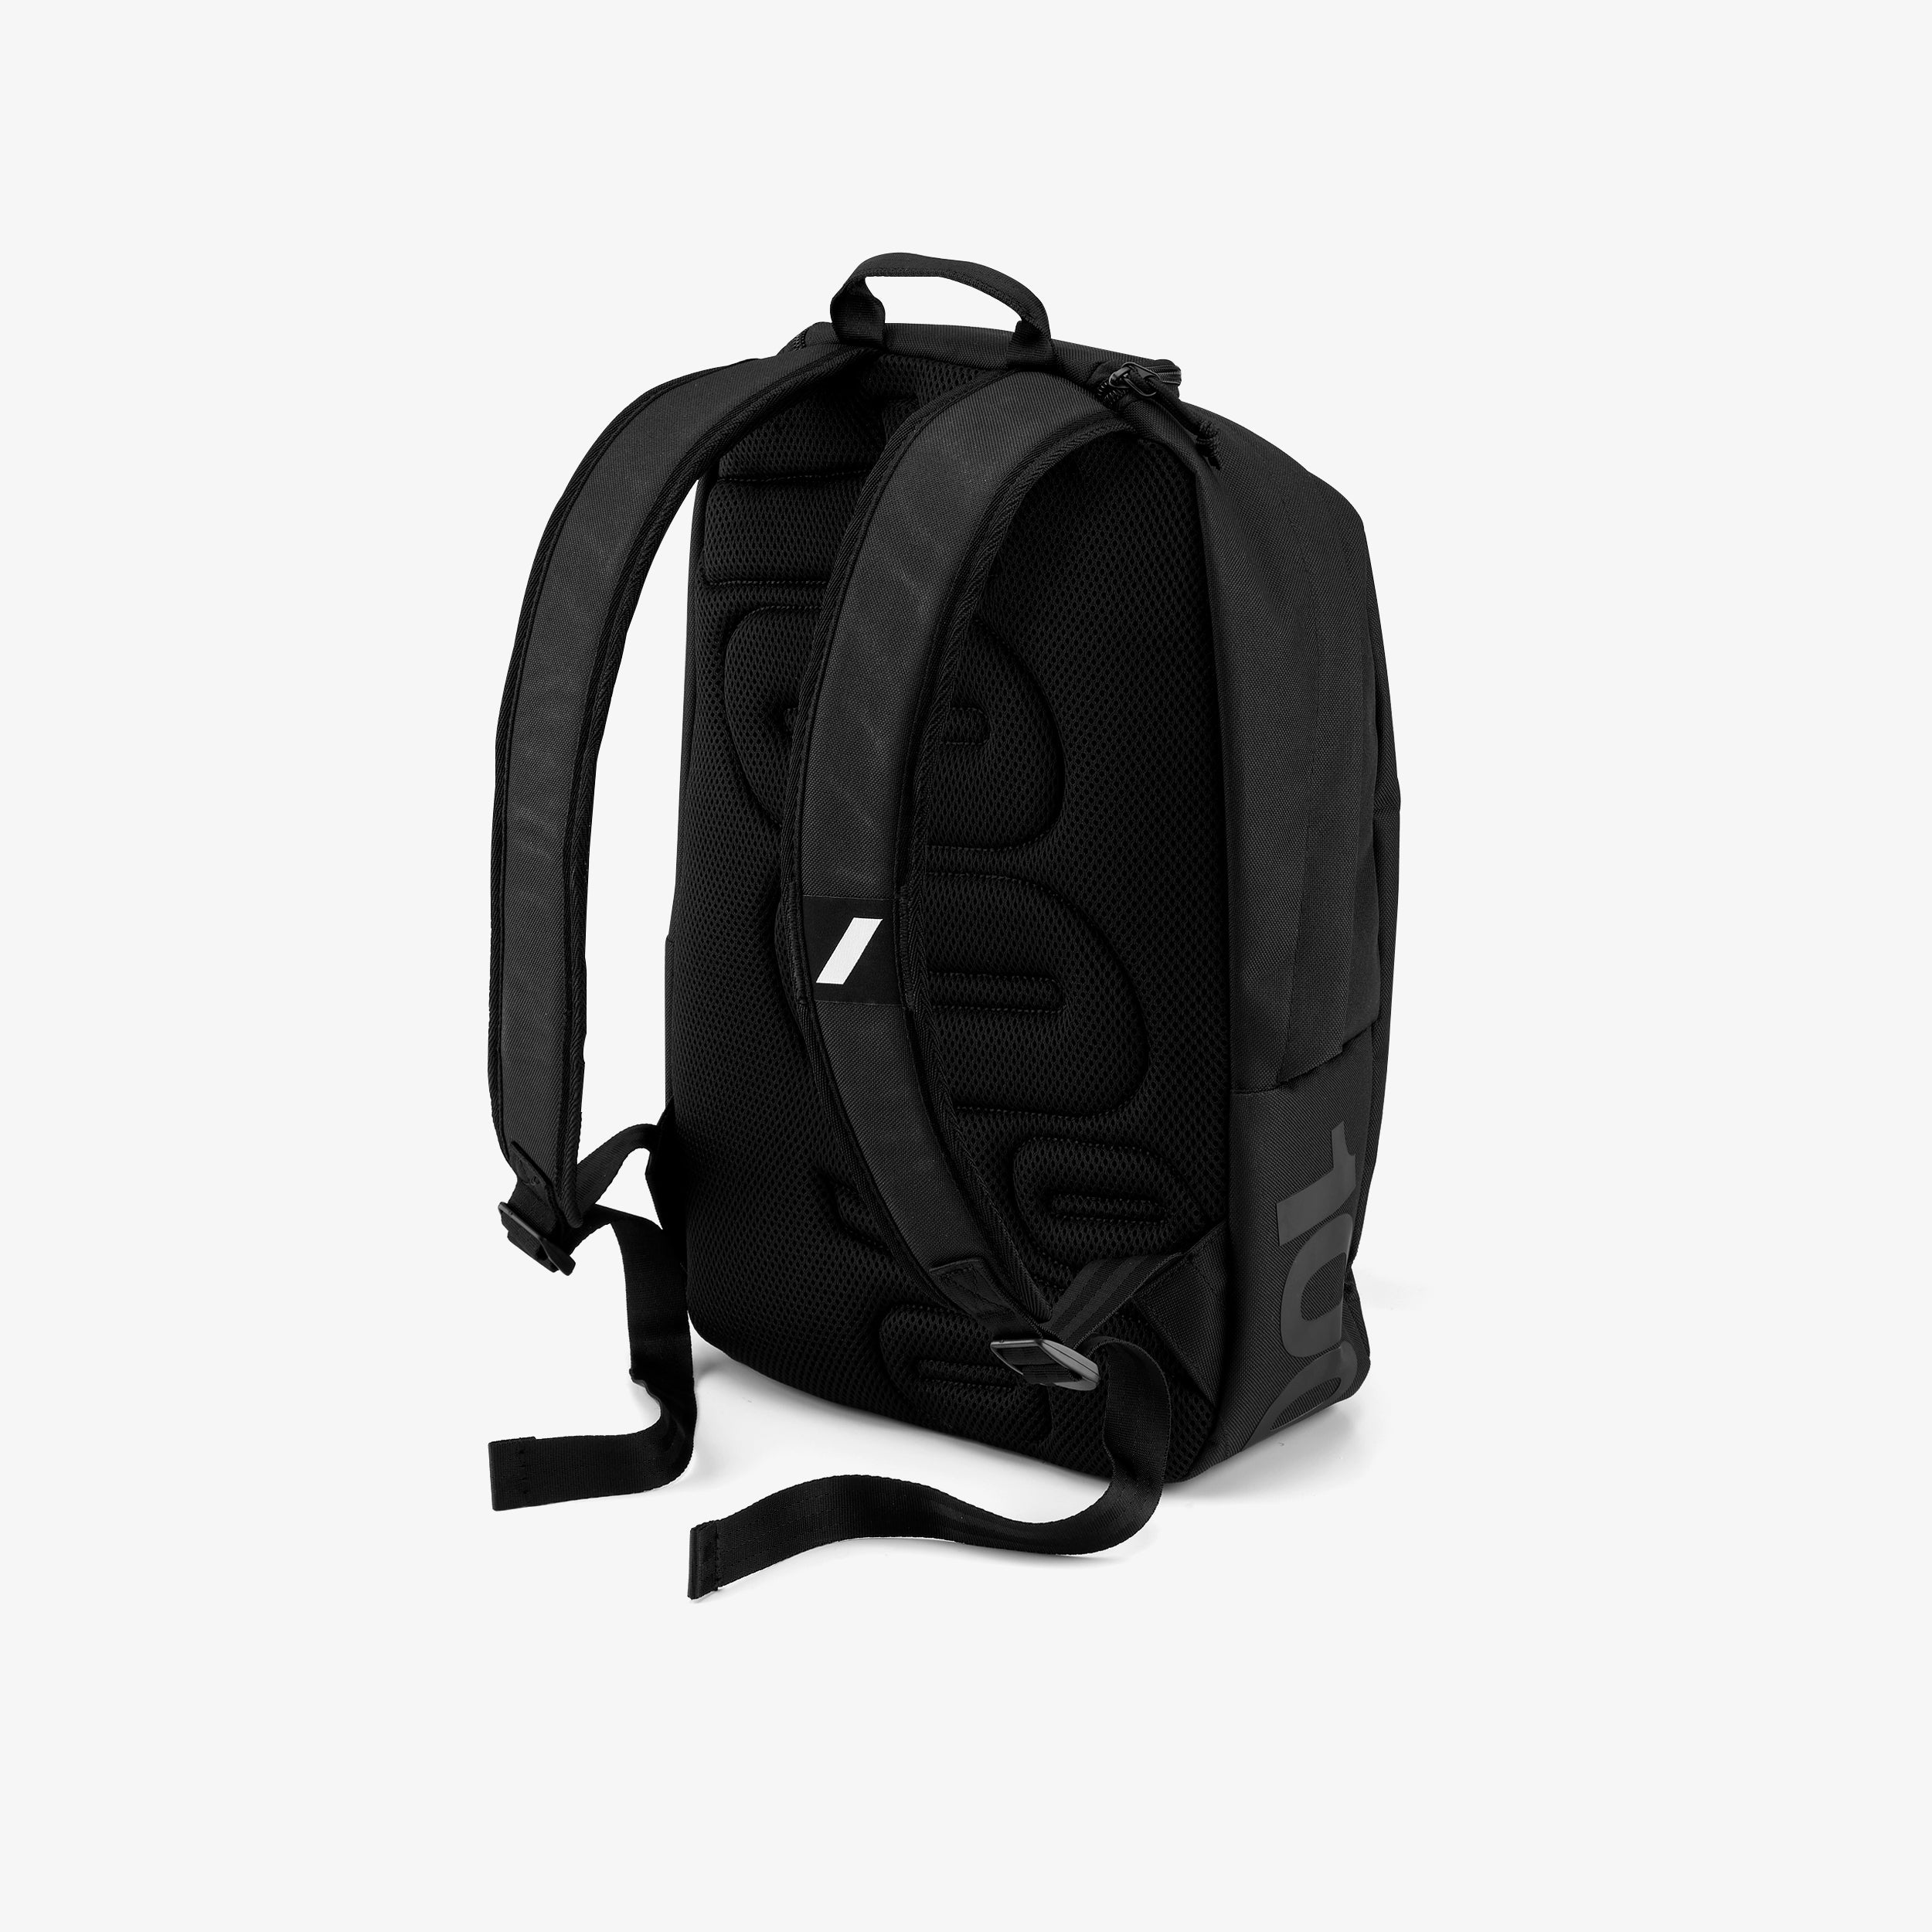 SKYCAP Black Backpack - Secondary